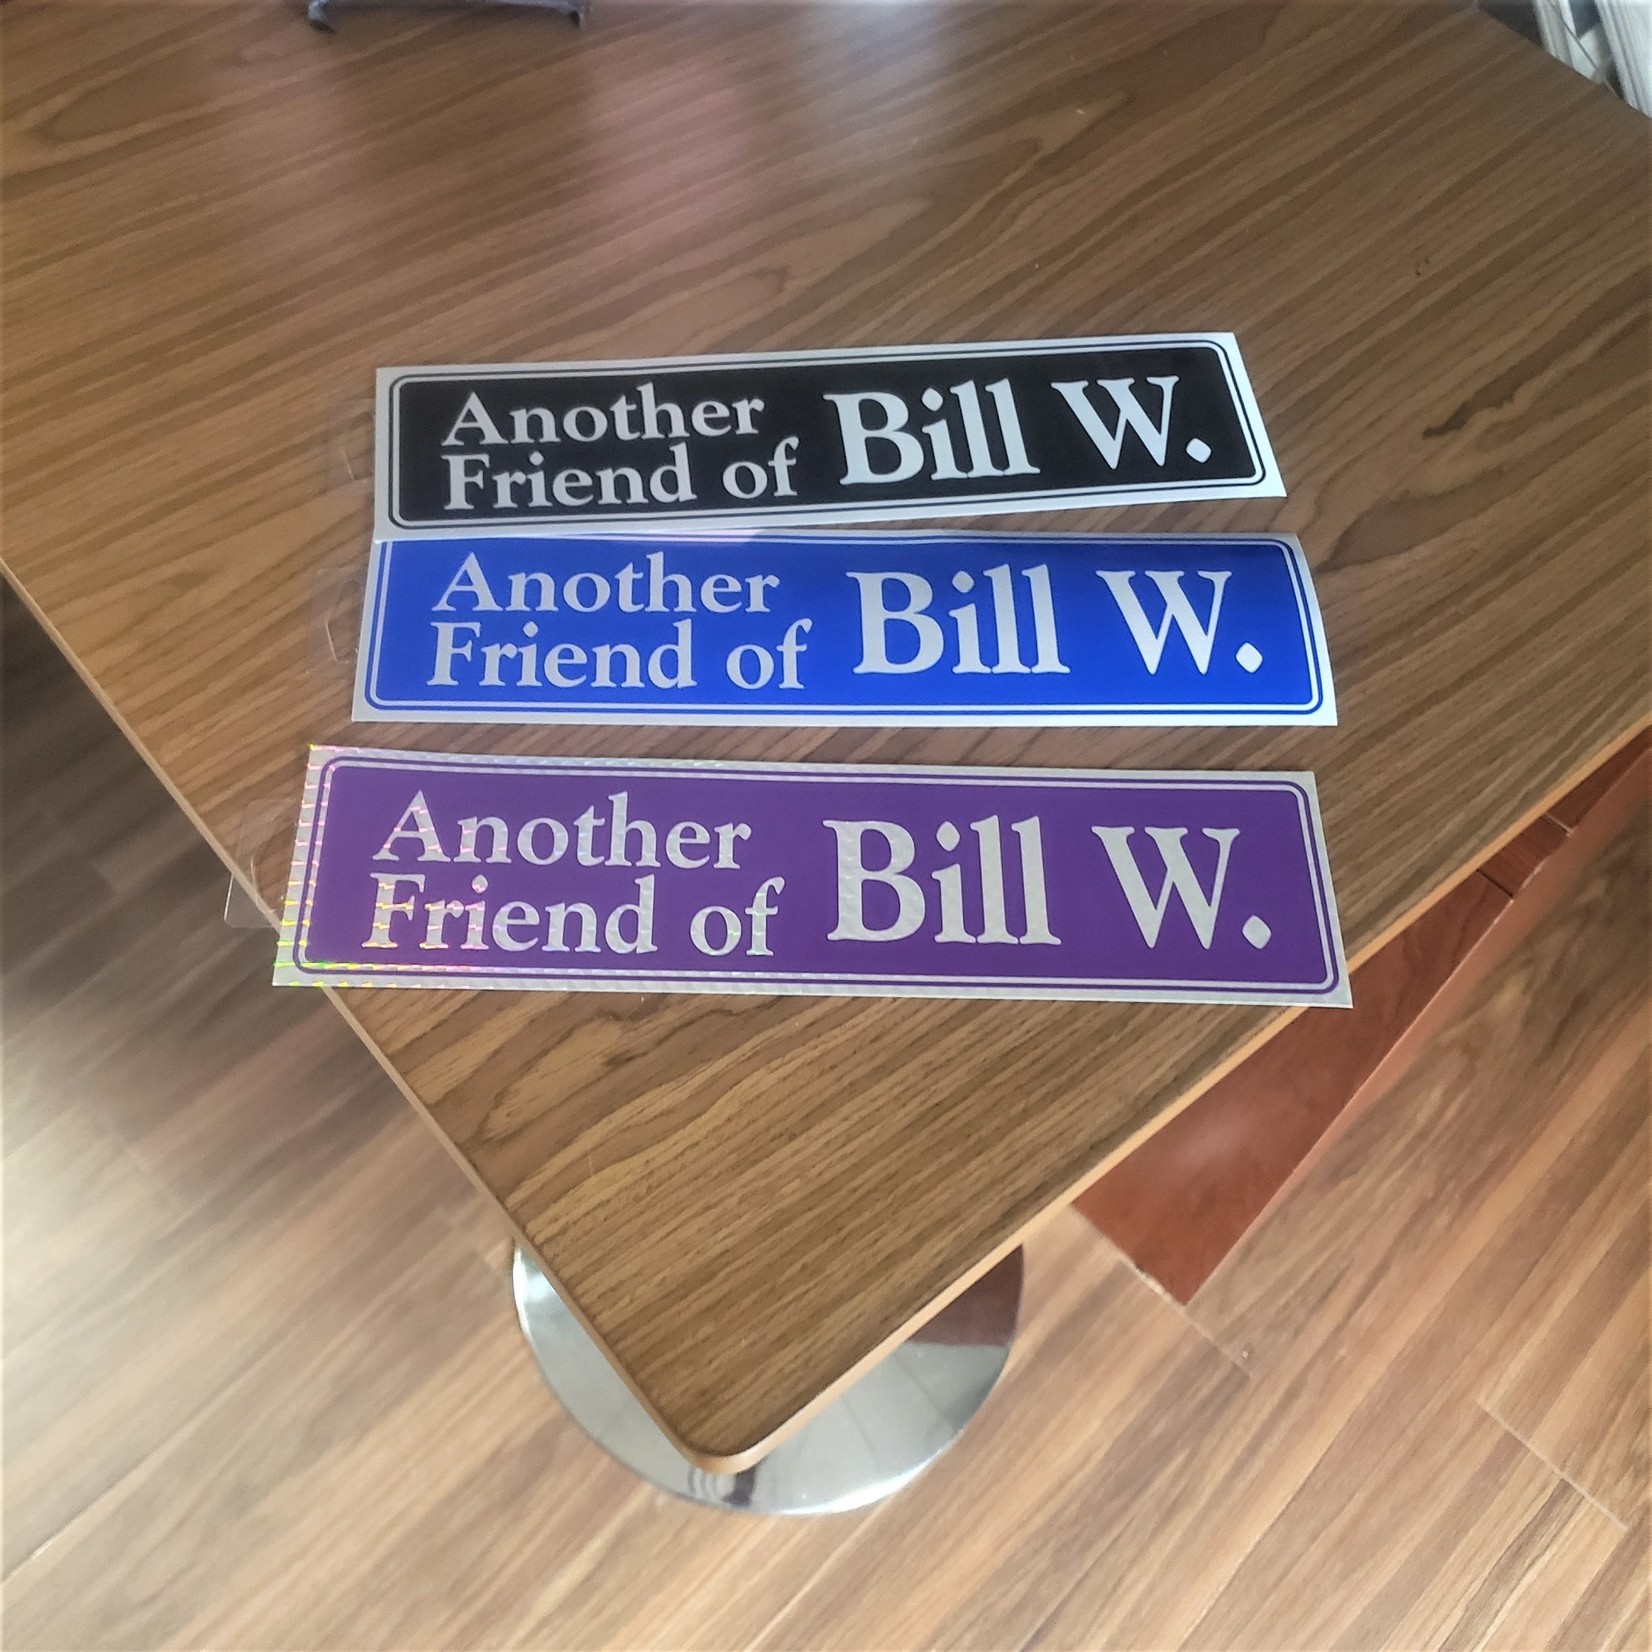 Another Friend of Bill W. [Blue] Bumper Sticker